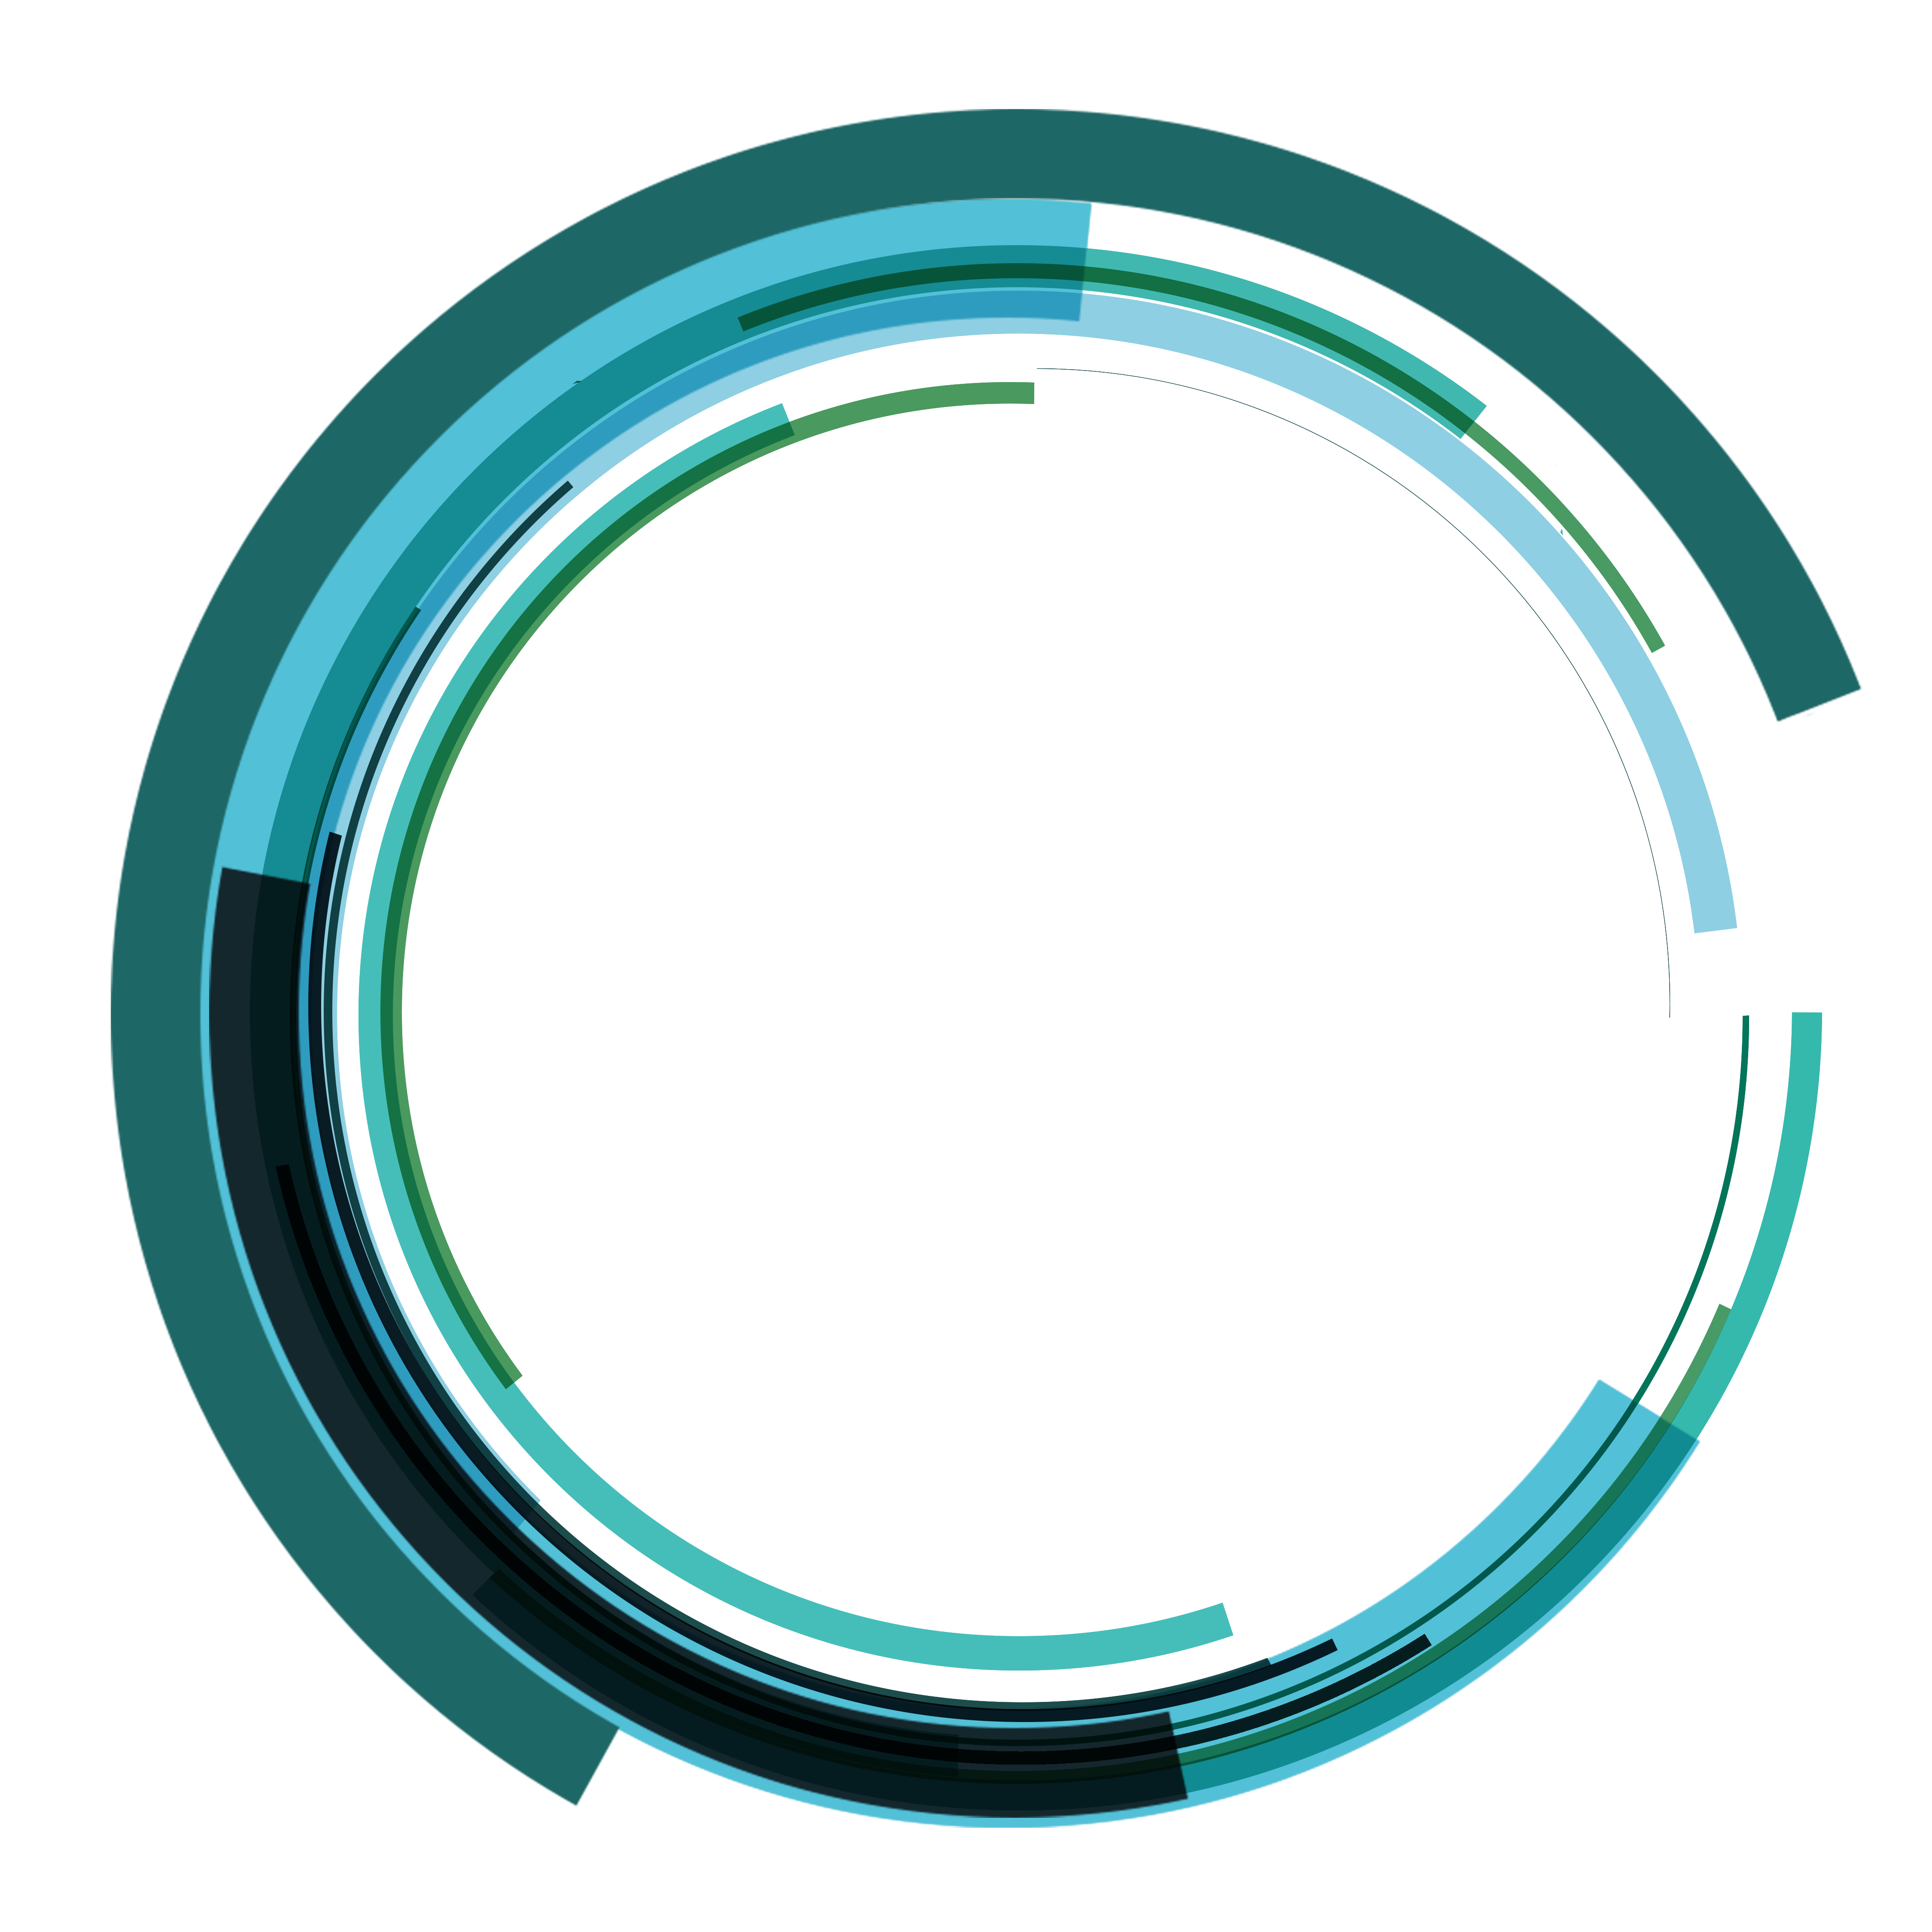 Scrum & PMBOK - Para gerentes de projetos